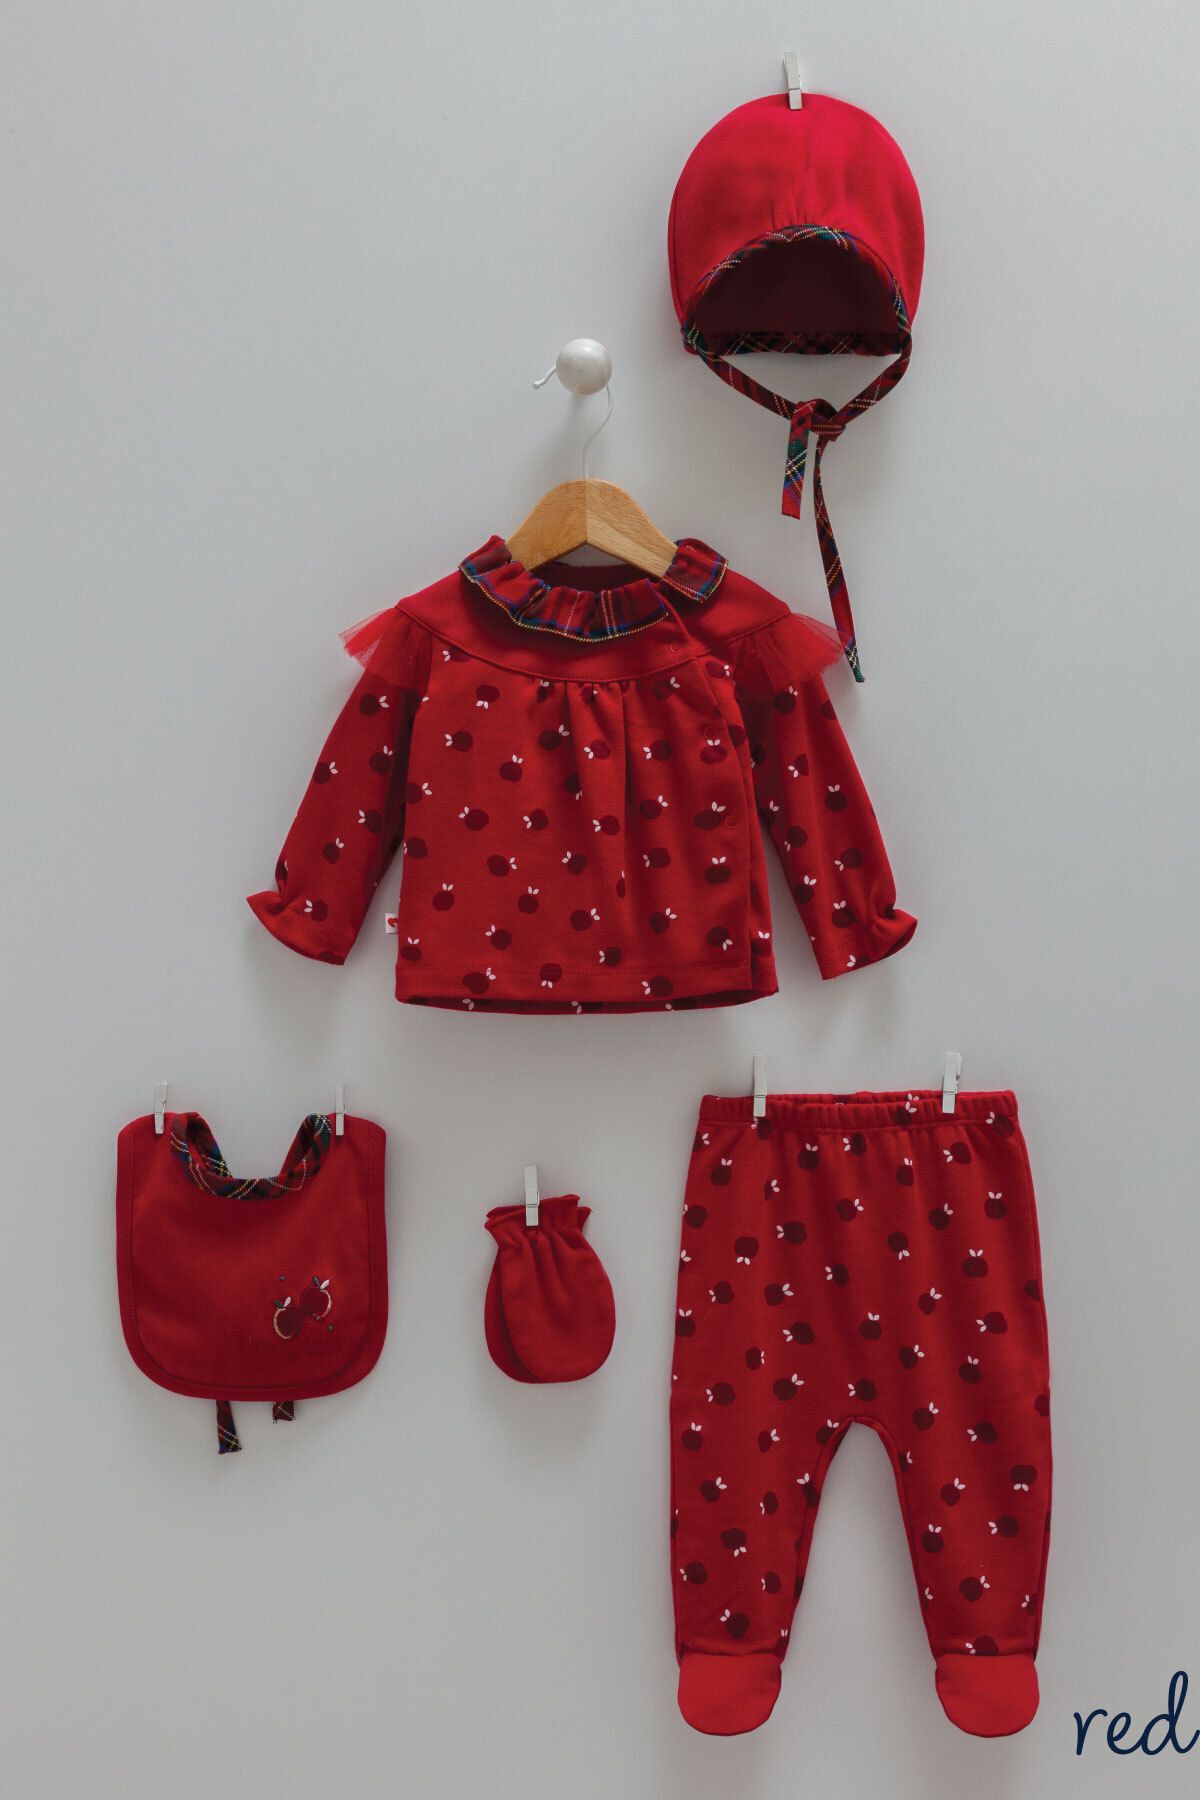 Caramell ست ترخیص نوزاد از بیمارستان با تم سال نو لباس دختر قرمز رنگ 5 تایی